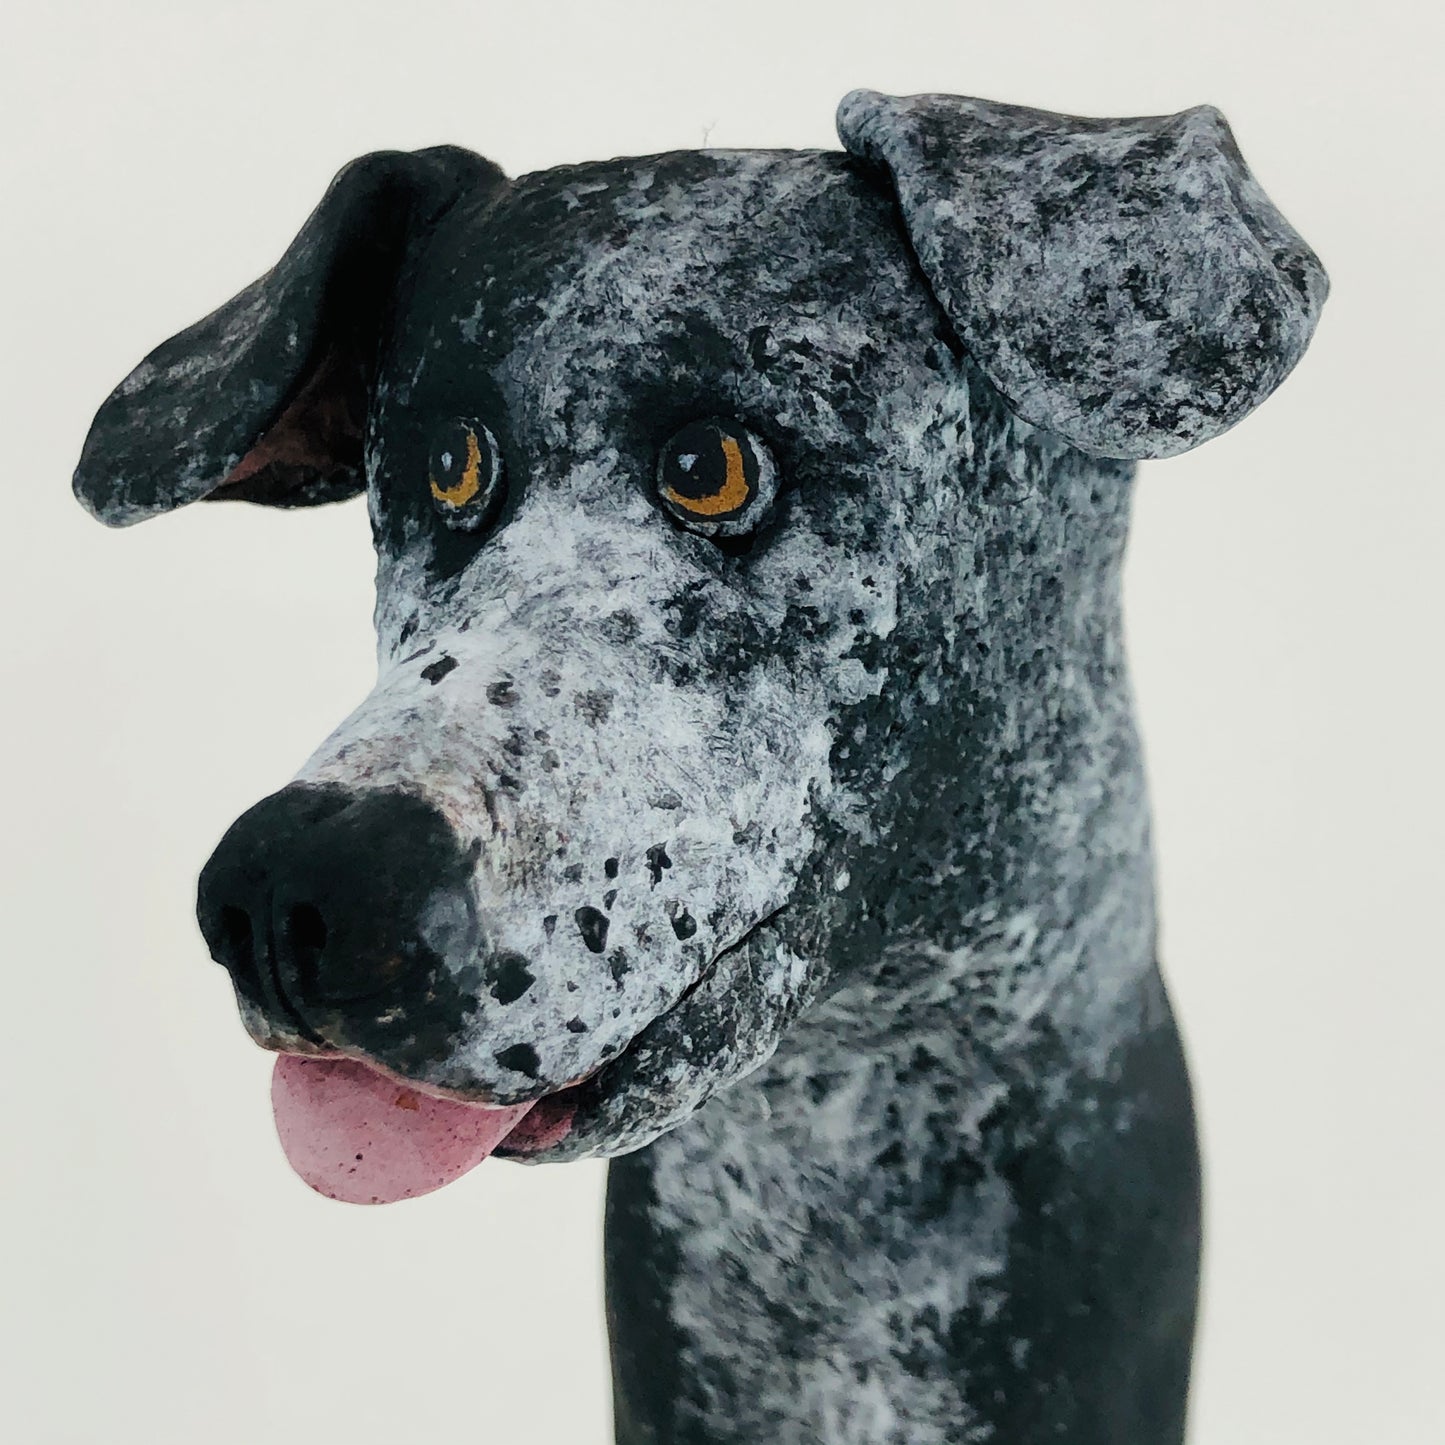 Dog Sculptures